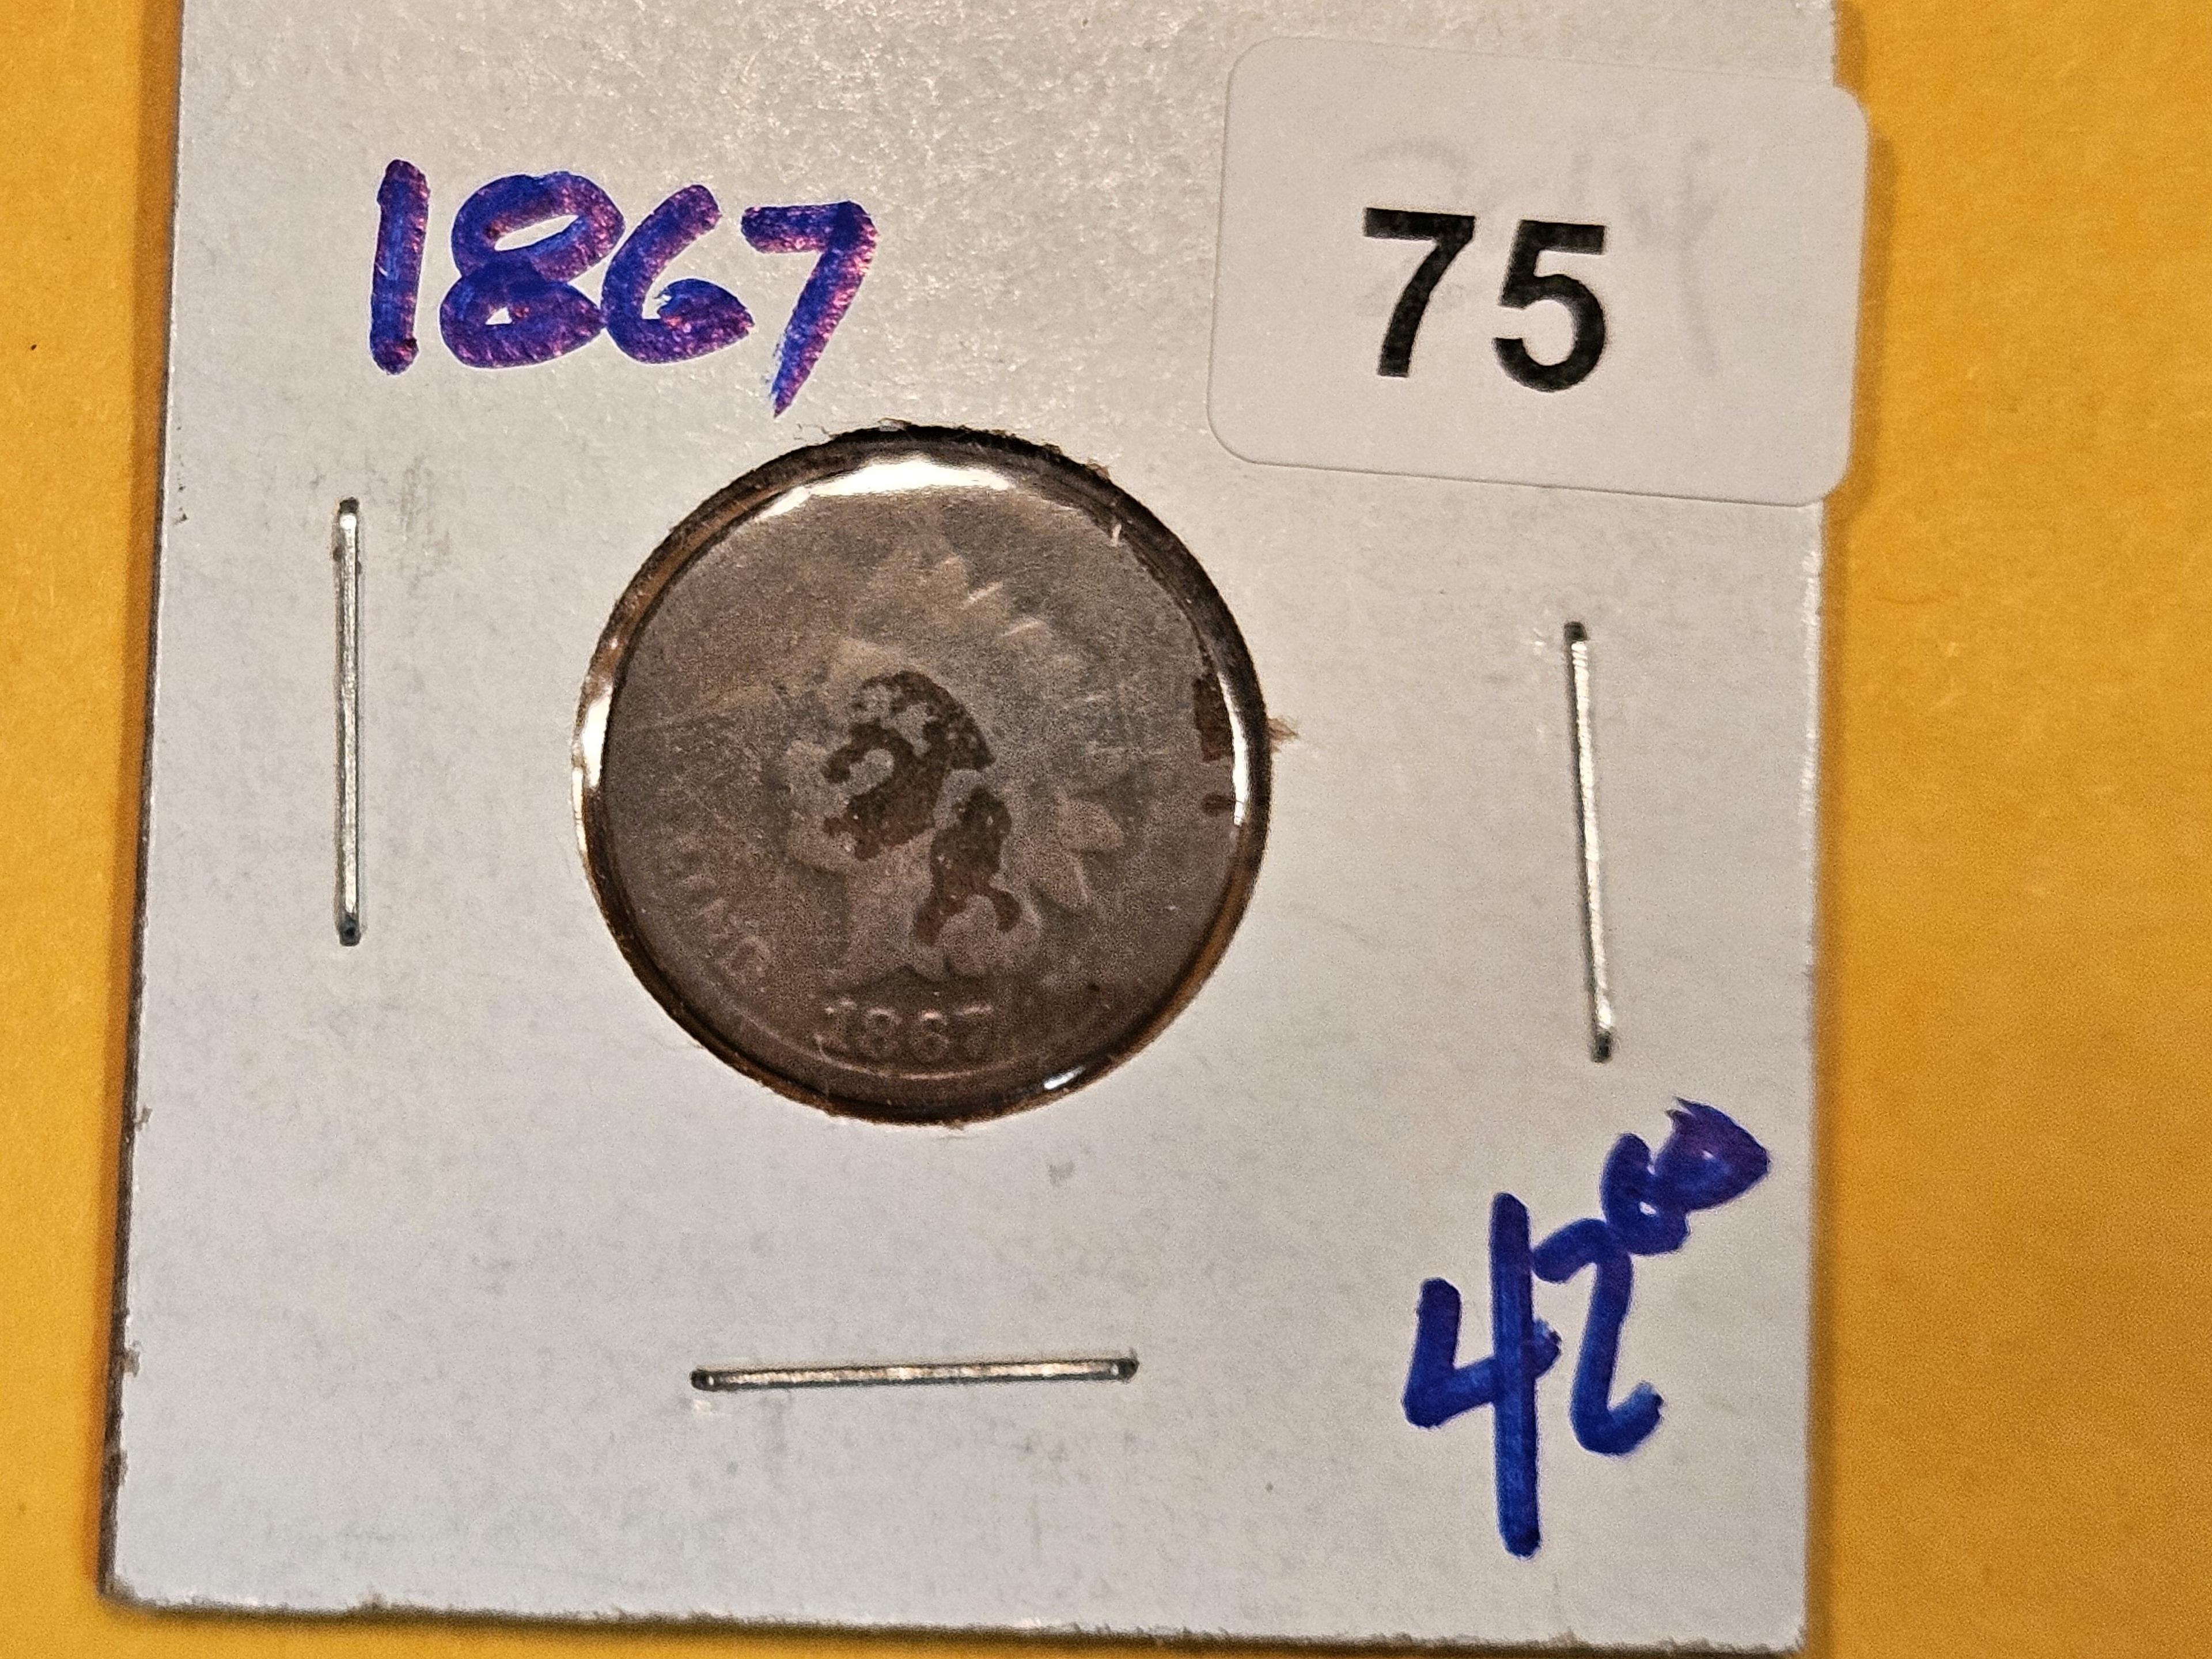 Semi-key 1867 Indian Cent